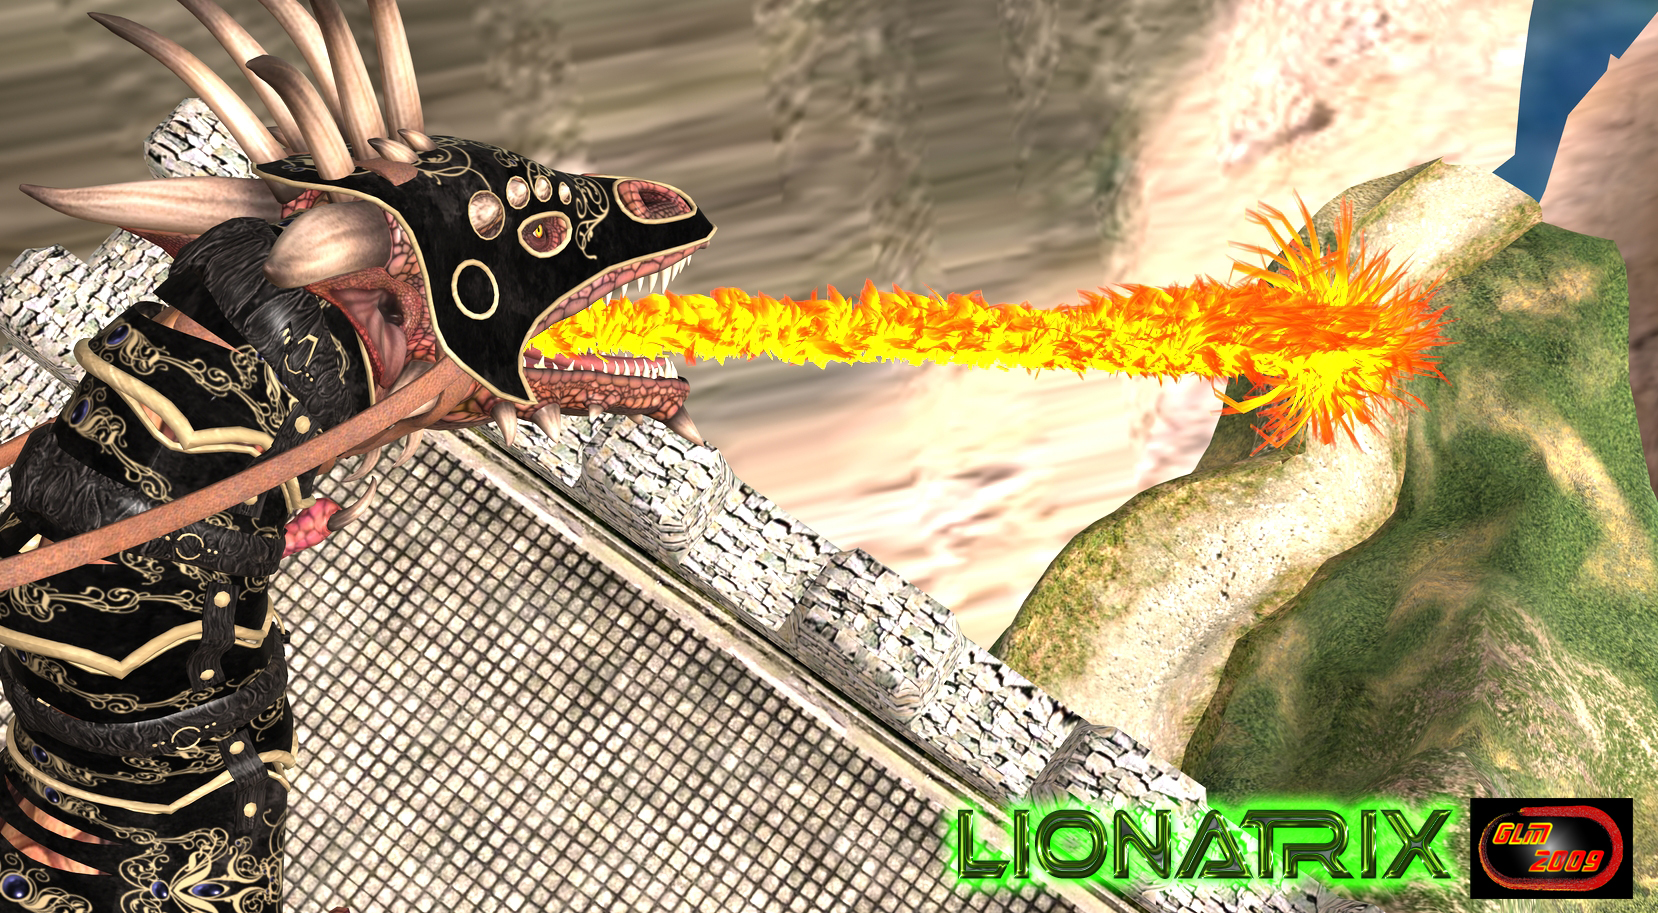 Lionatrix 11